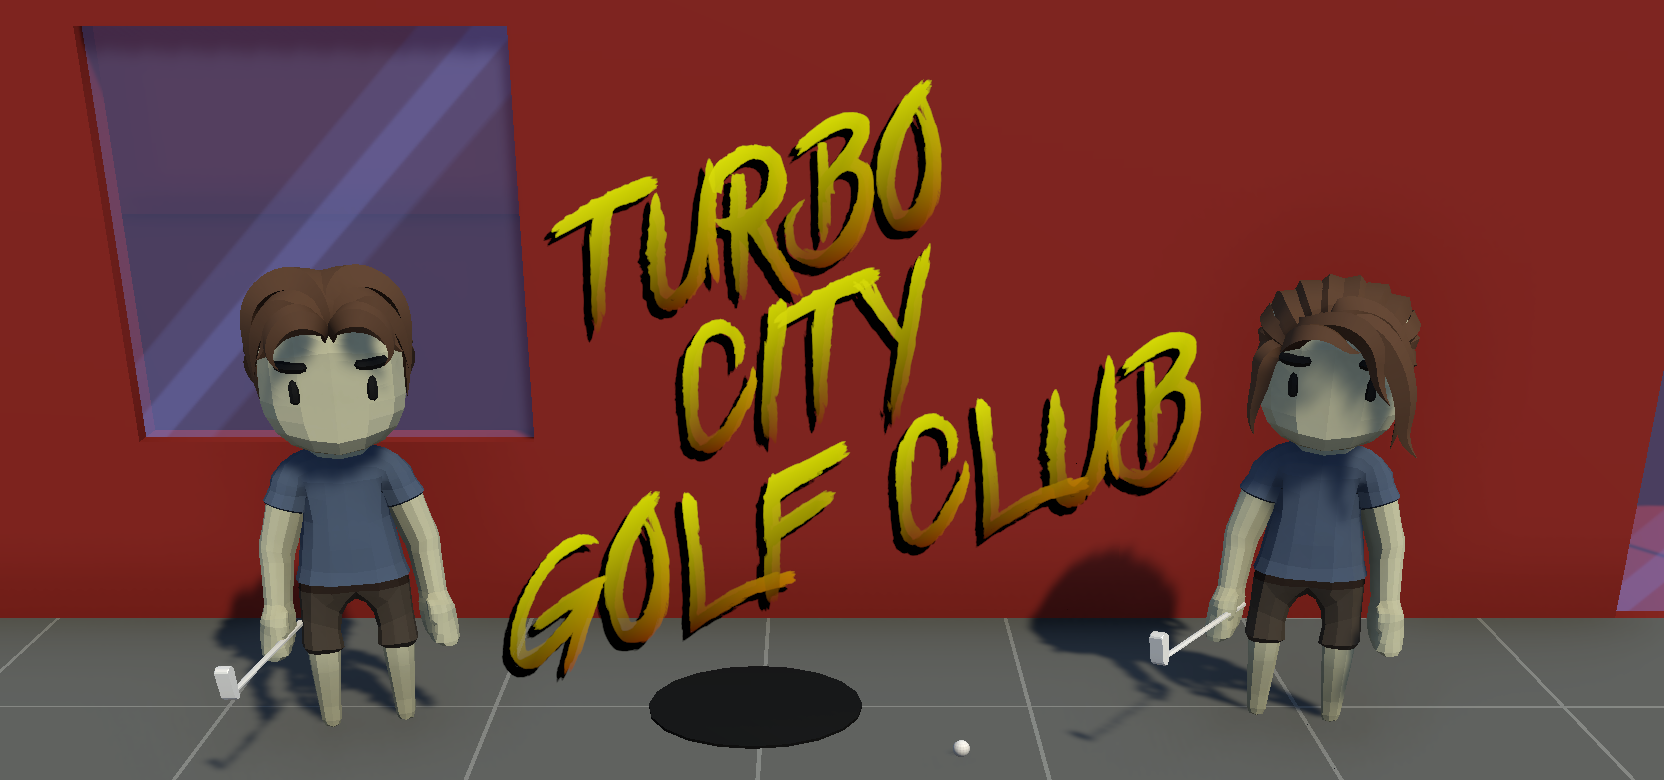 Turbo City Golf Club